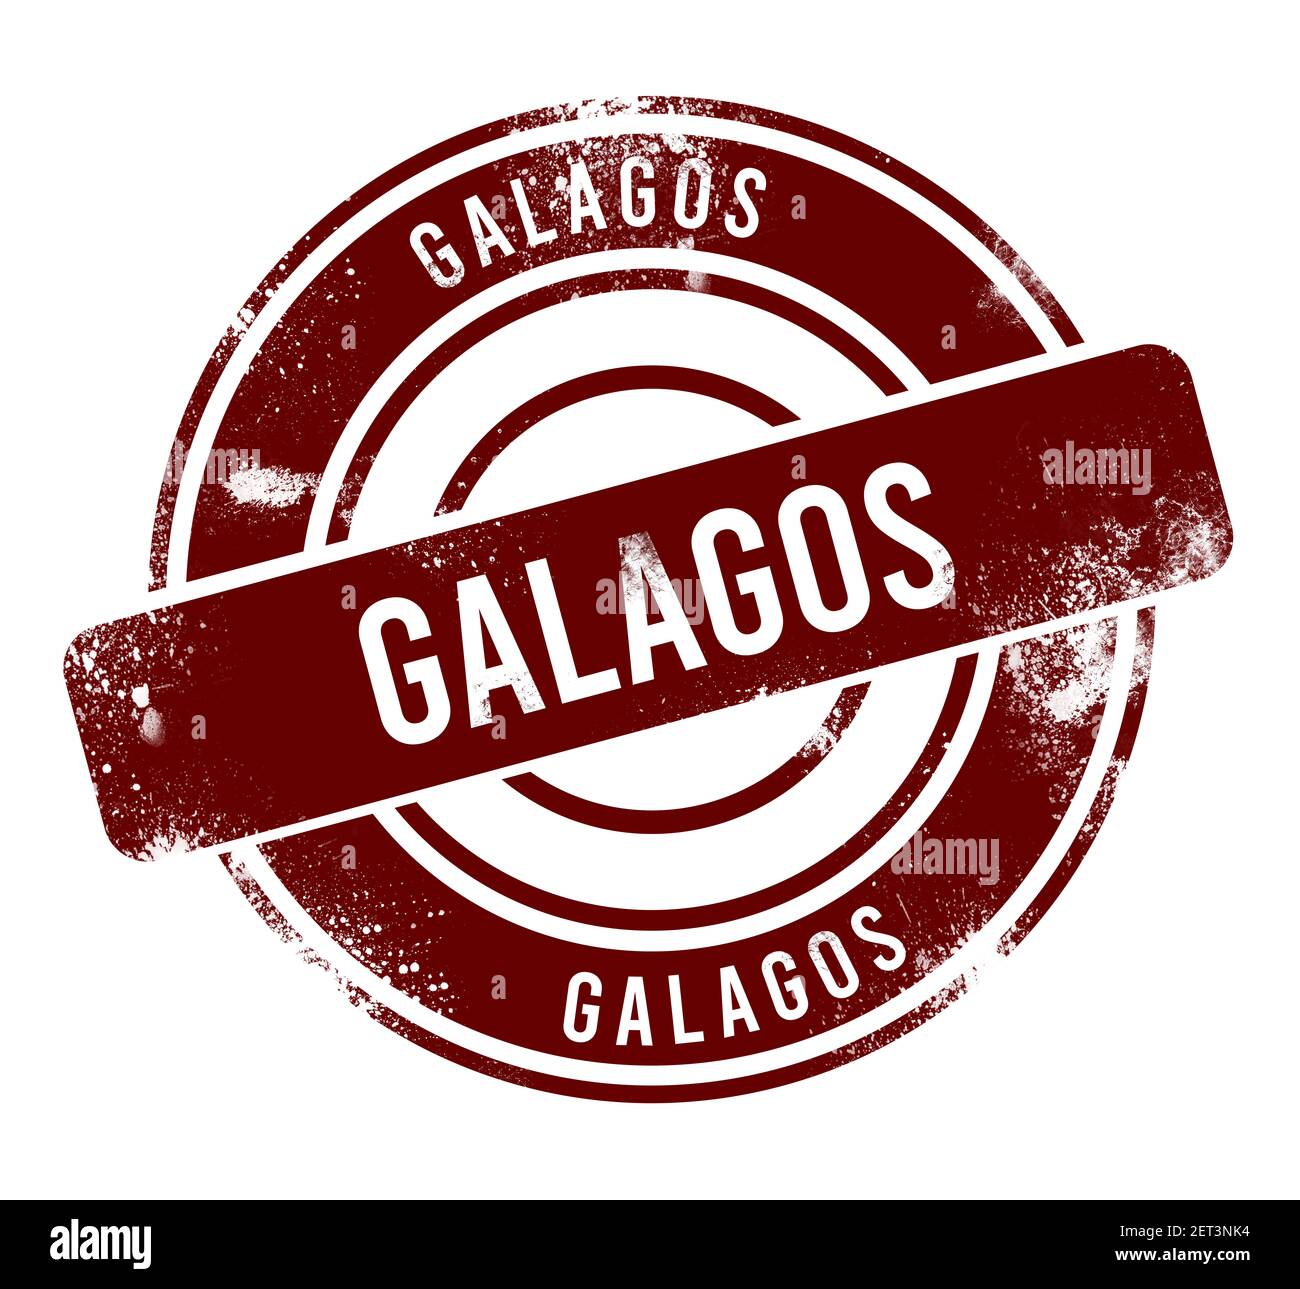 galagos - red round grunge button, stamp Stock Photo